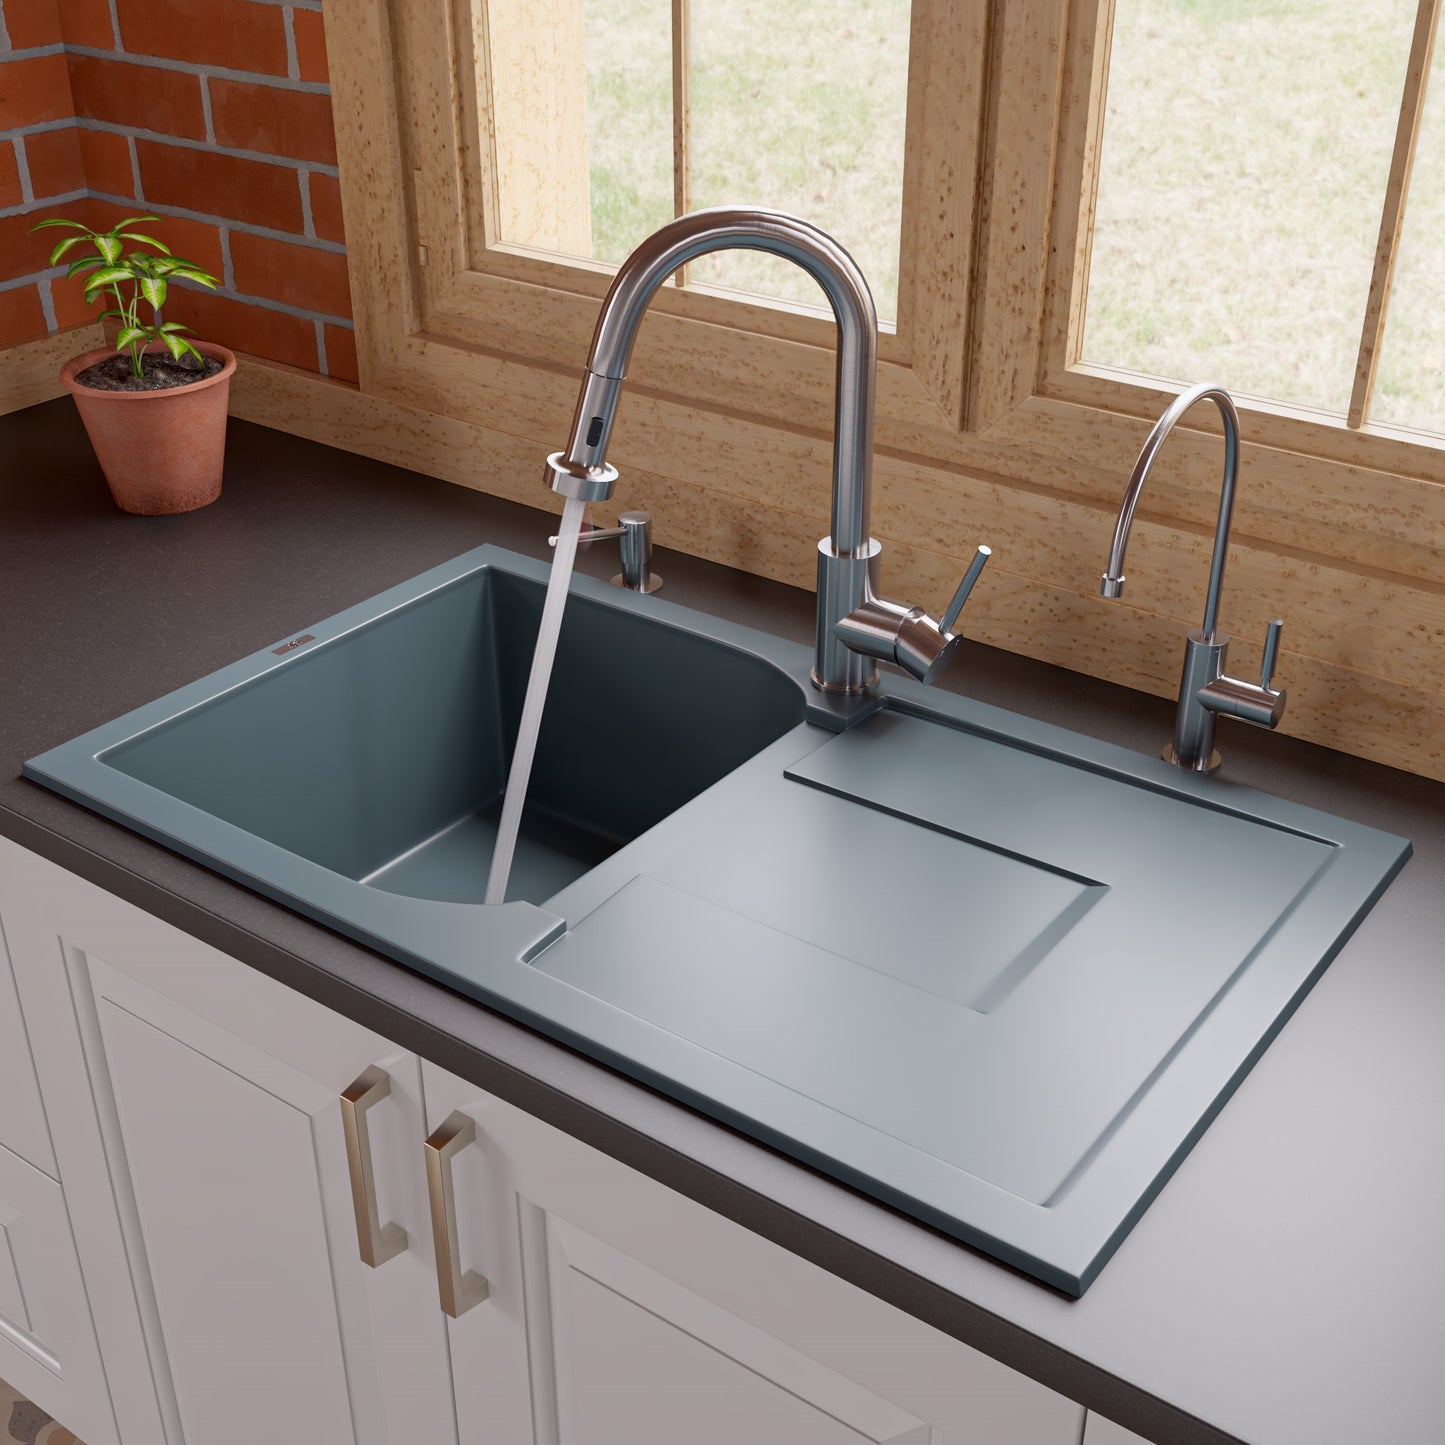 Alfi brand AB1620DI 34" Single Bowl Granite Composite Kitchen Sink with Drainboard Kitchen Sink ALFI brand Titanium  